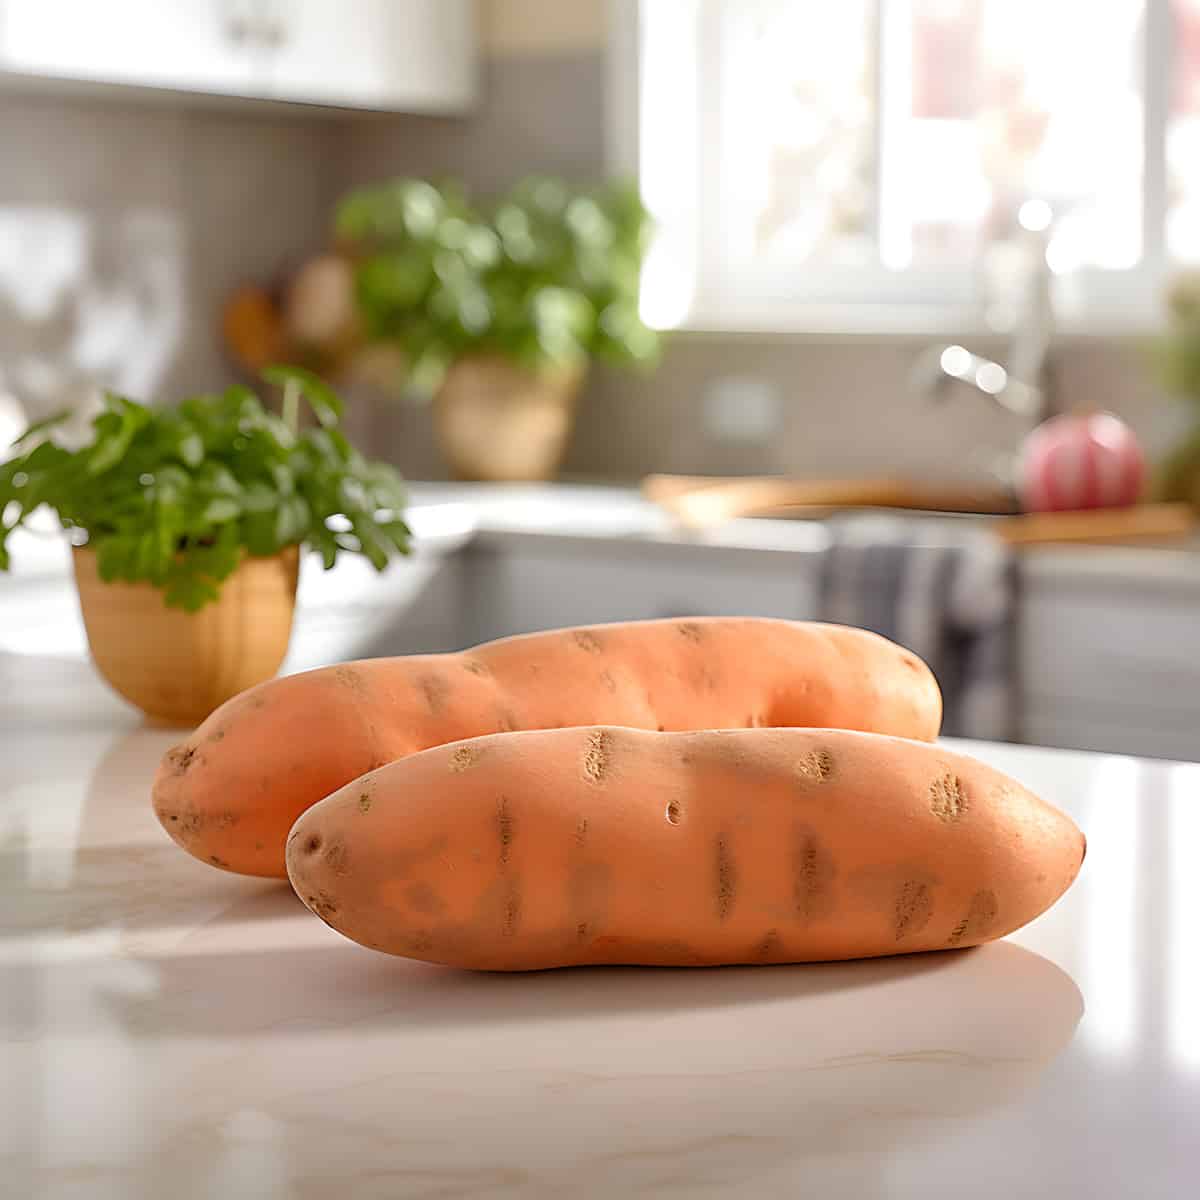 Sunnyside Sweet Potatoes on a kitchen counter